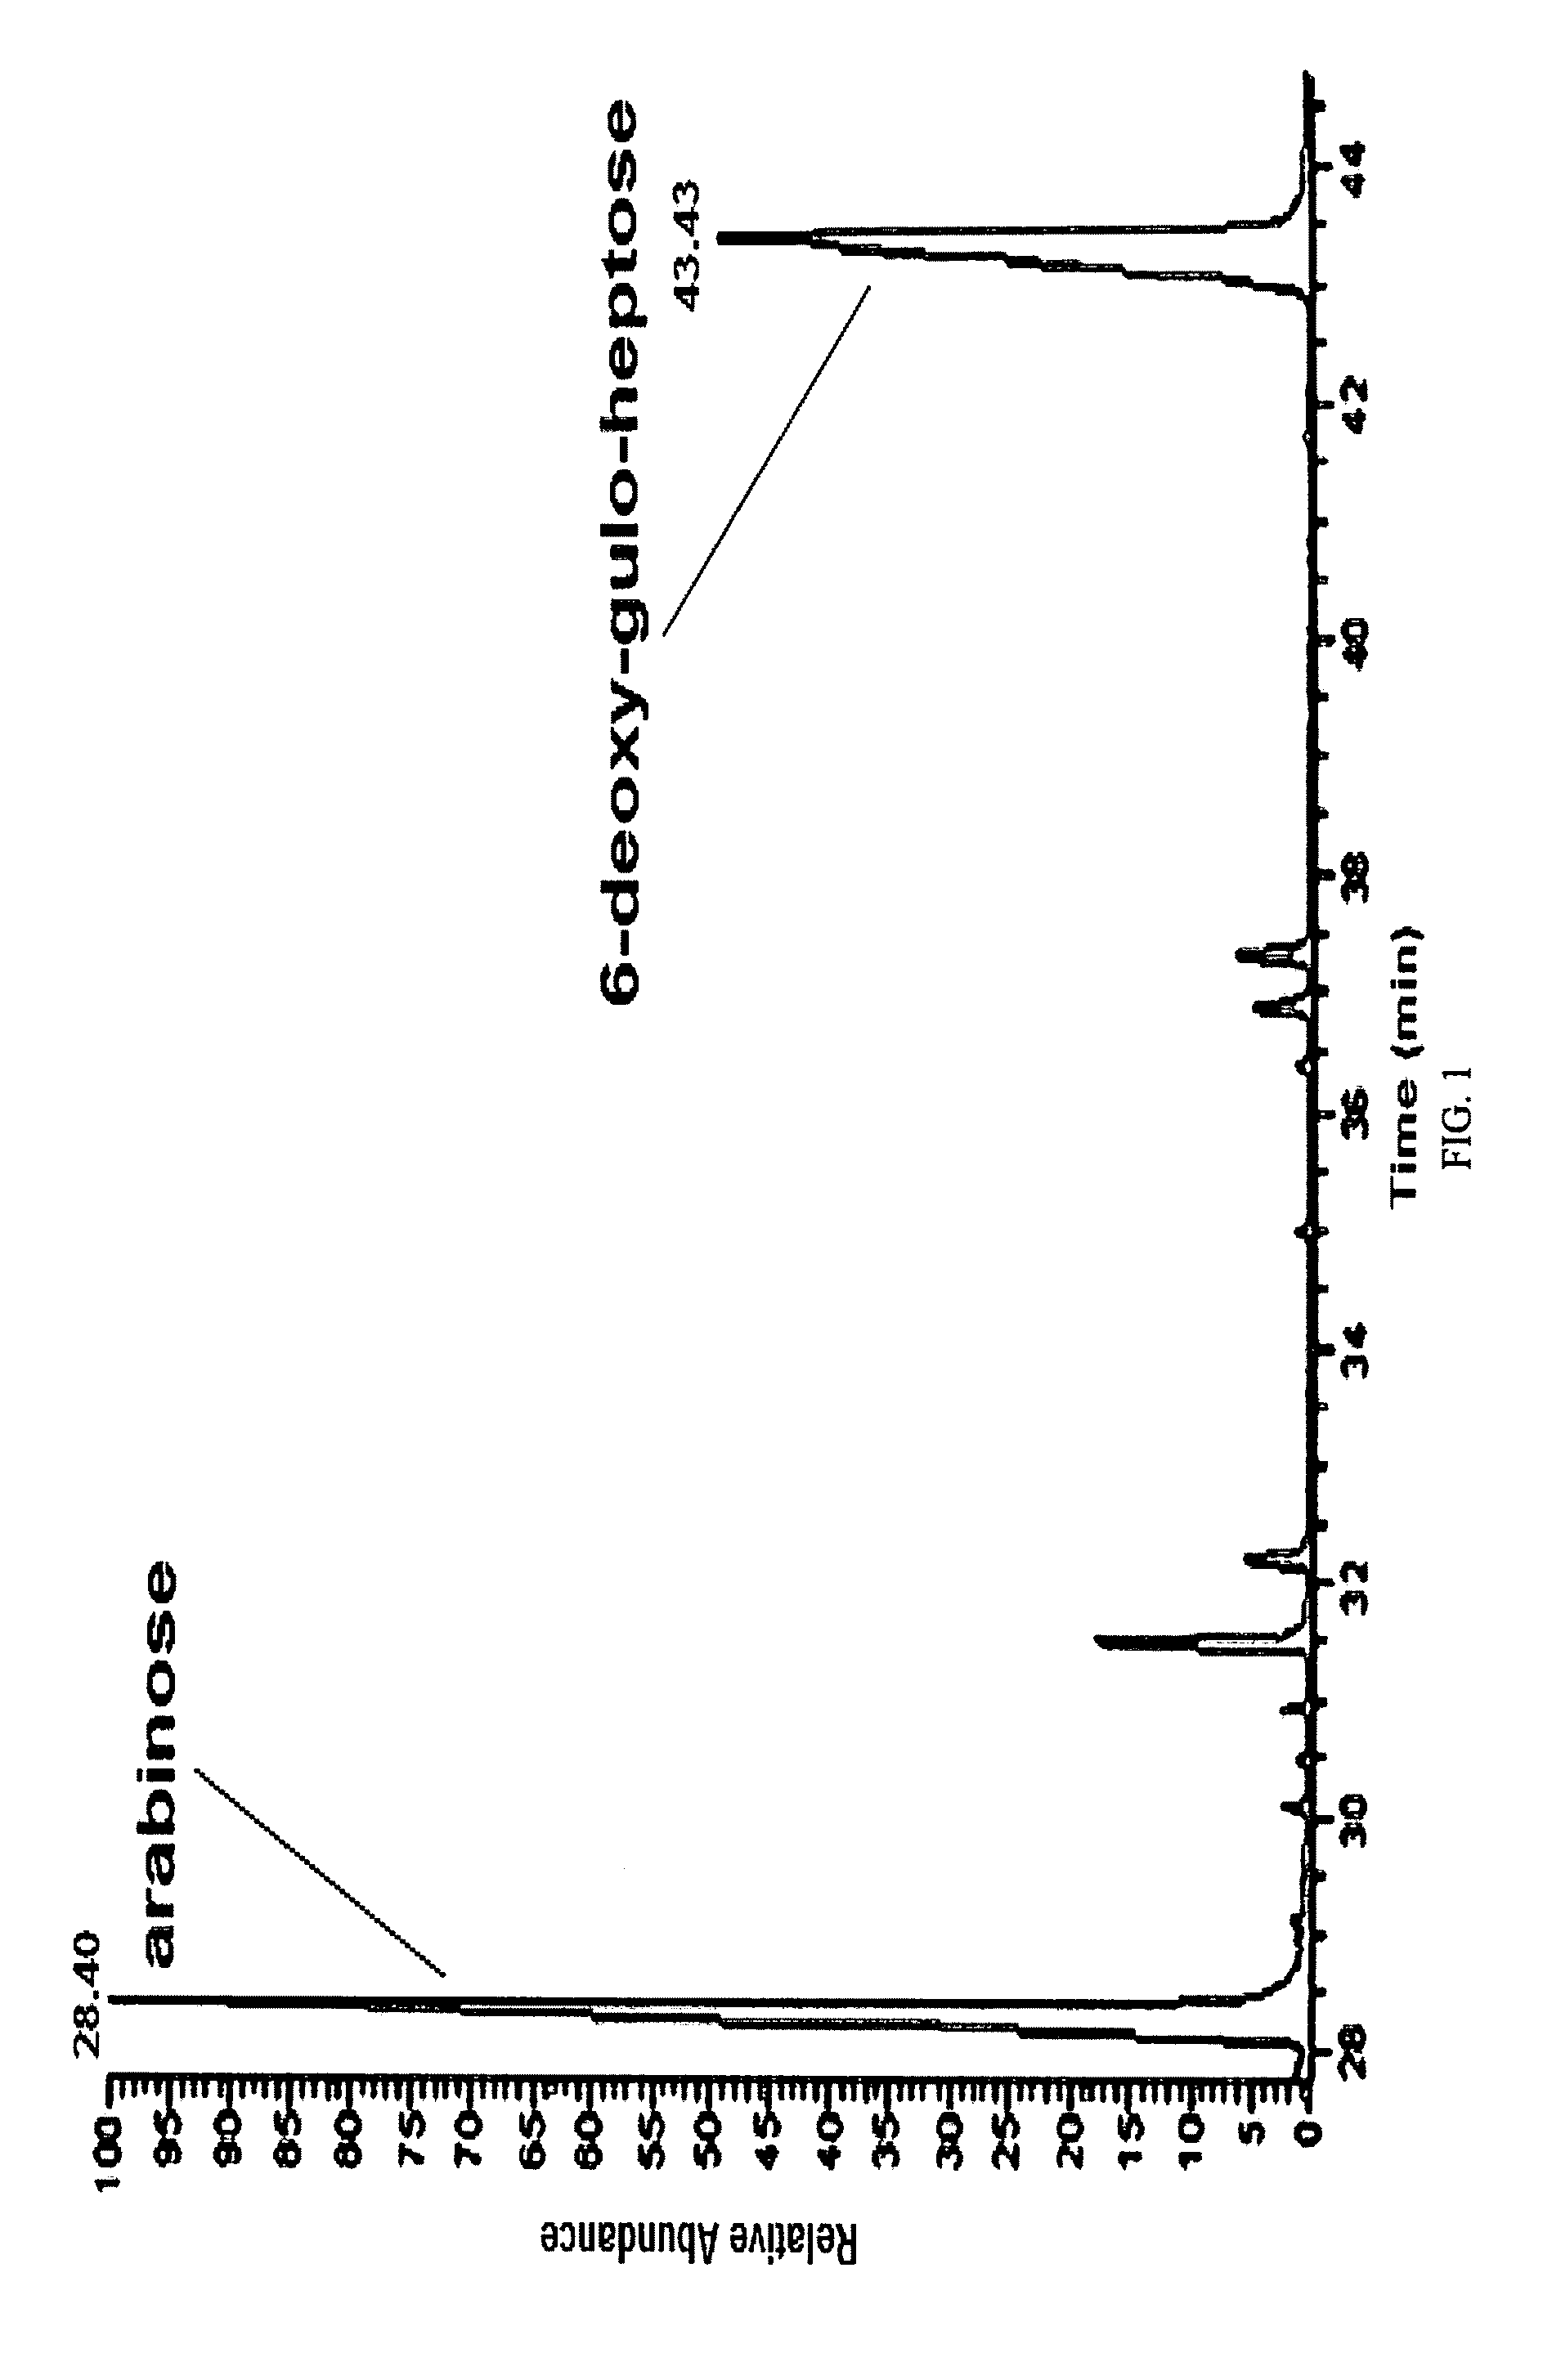 Capsule composition for use as immunogen against Campylobacter jejuni